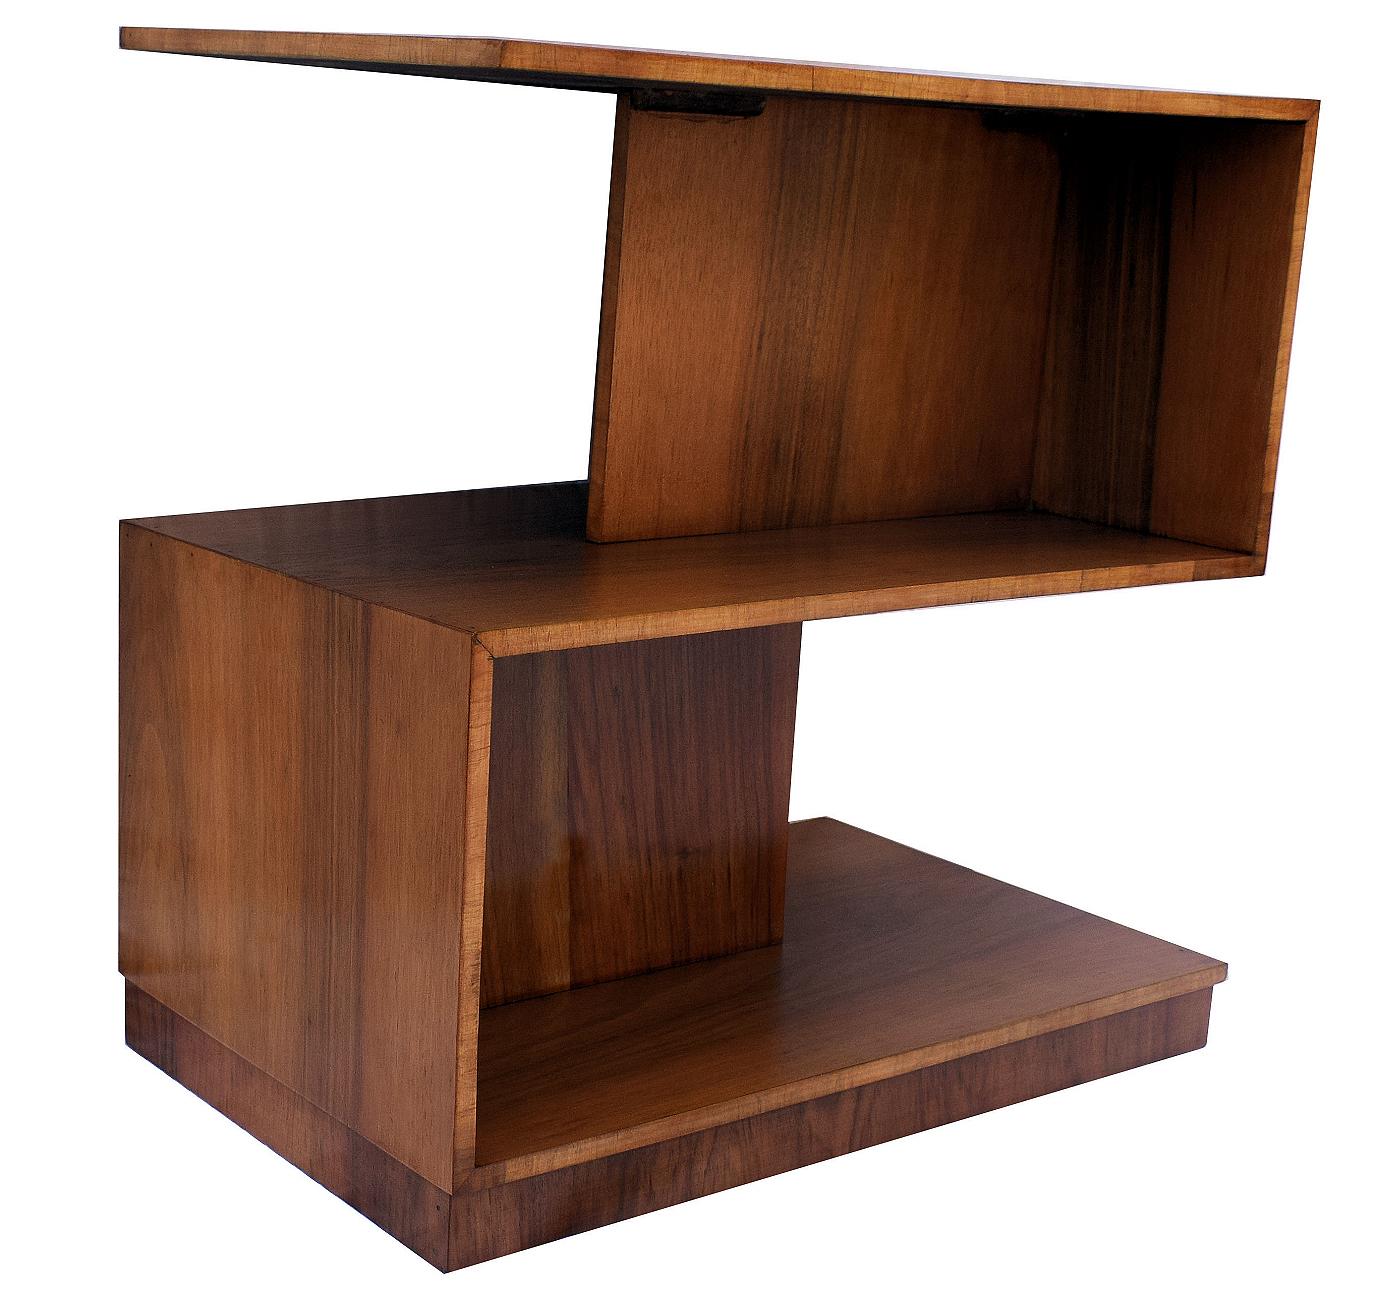 Great Britain (UK) Art Deco Geometric Modernist Walnut Two-Tier Table